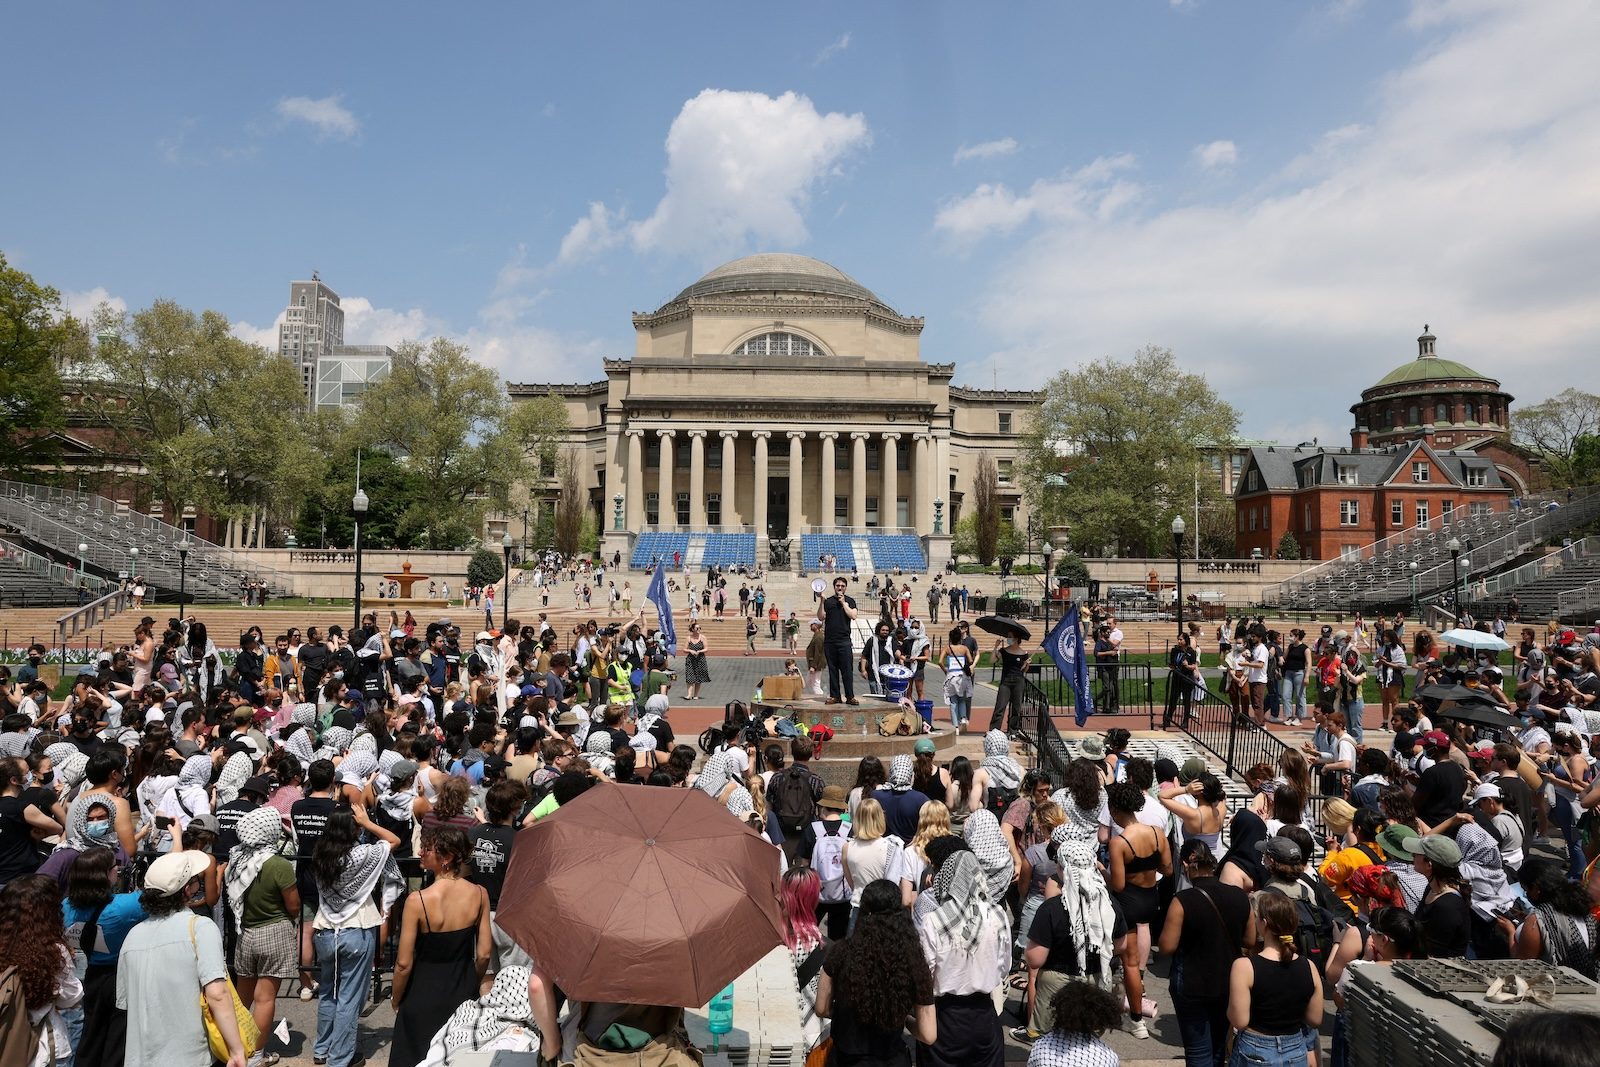 Columbia begins suspending protesters after encampment talks break down